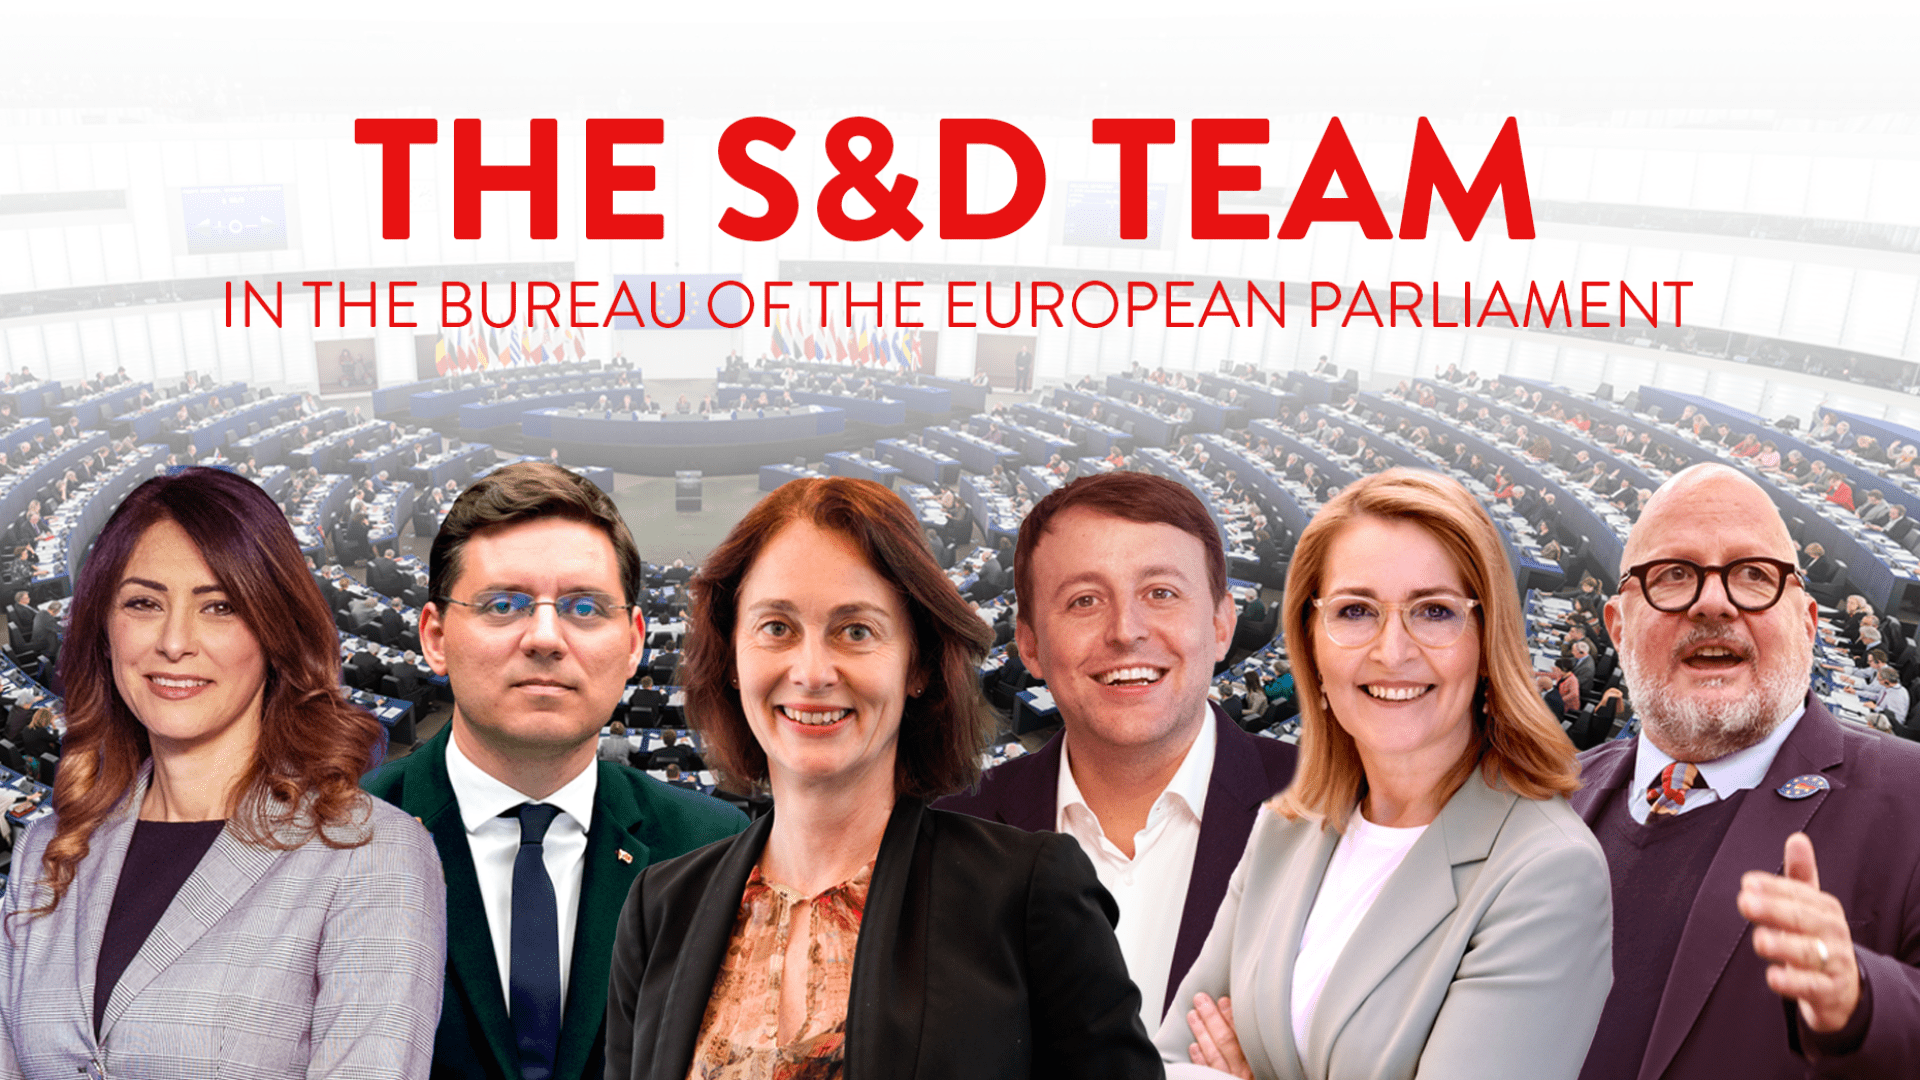 The S&D Team in the bureau of the European Parliament